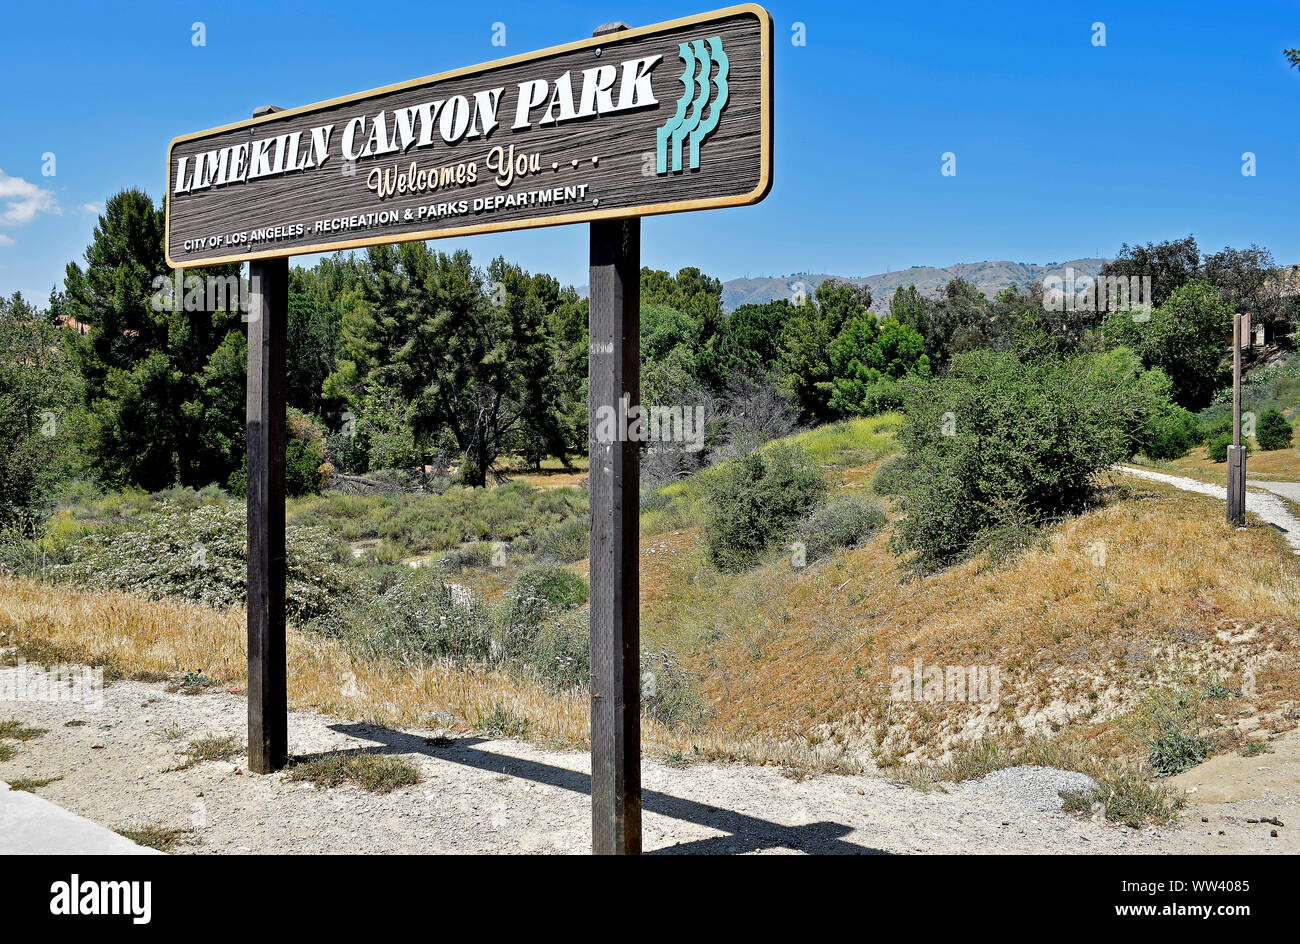 Limekiln Canyon Park; Los Angeles, California Stock Photo